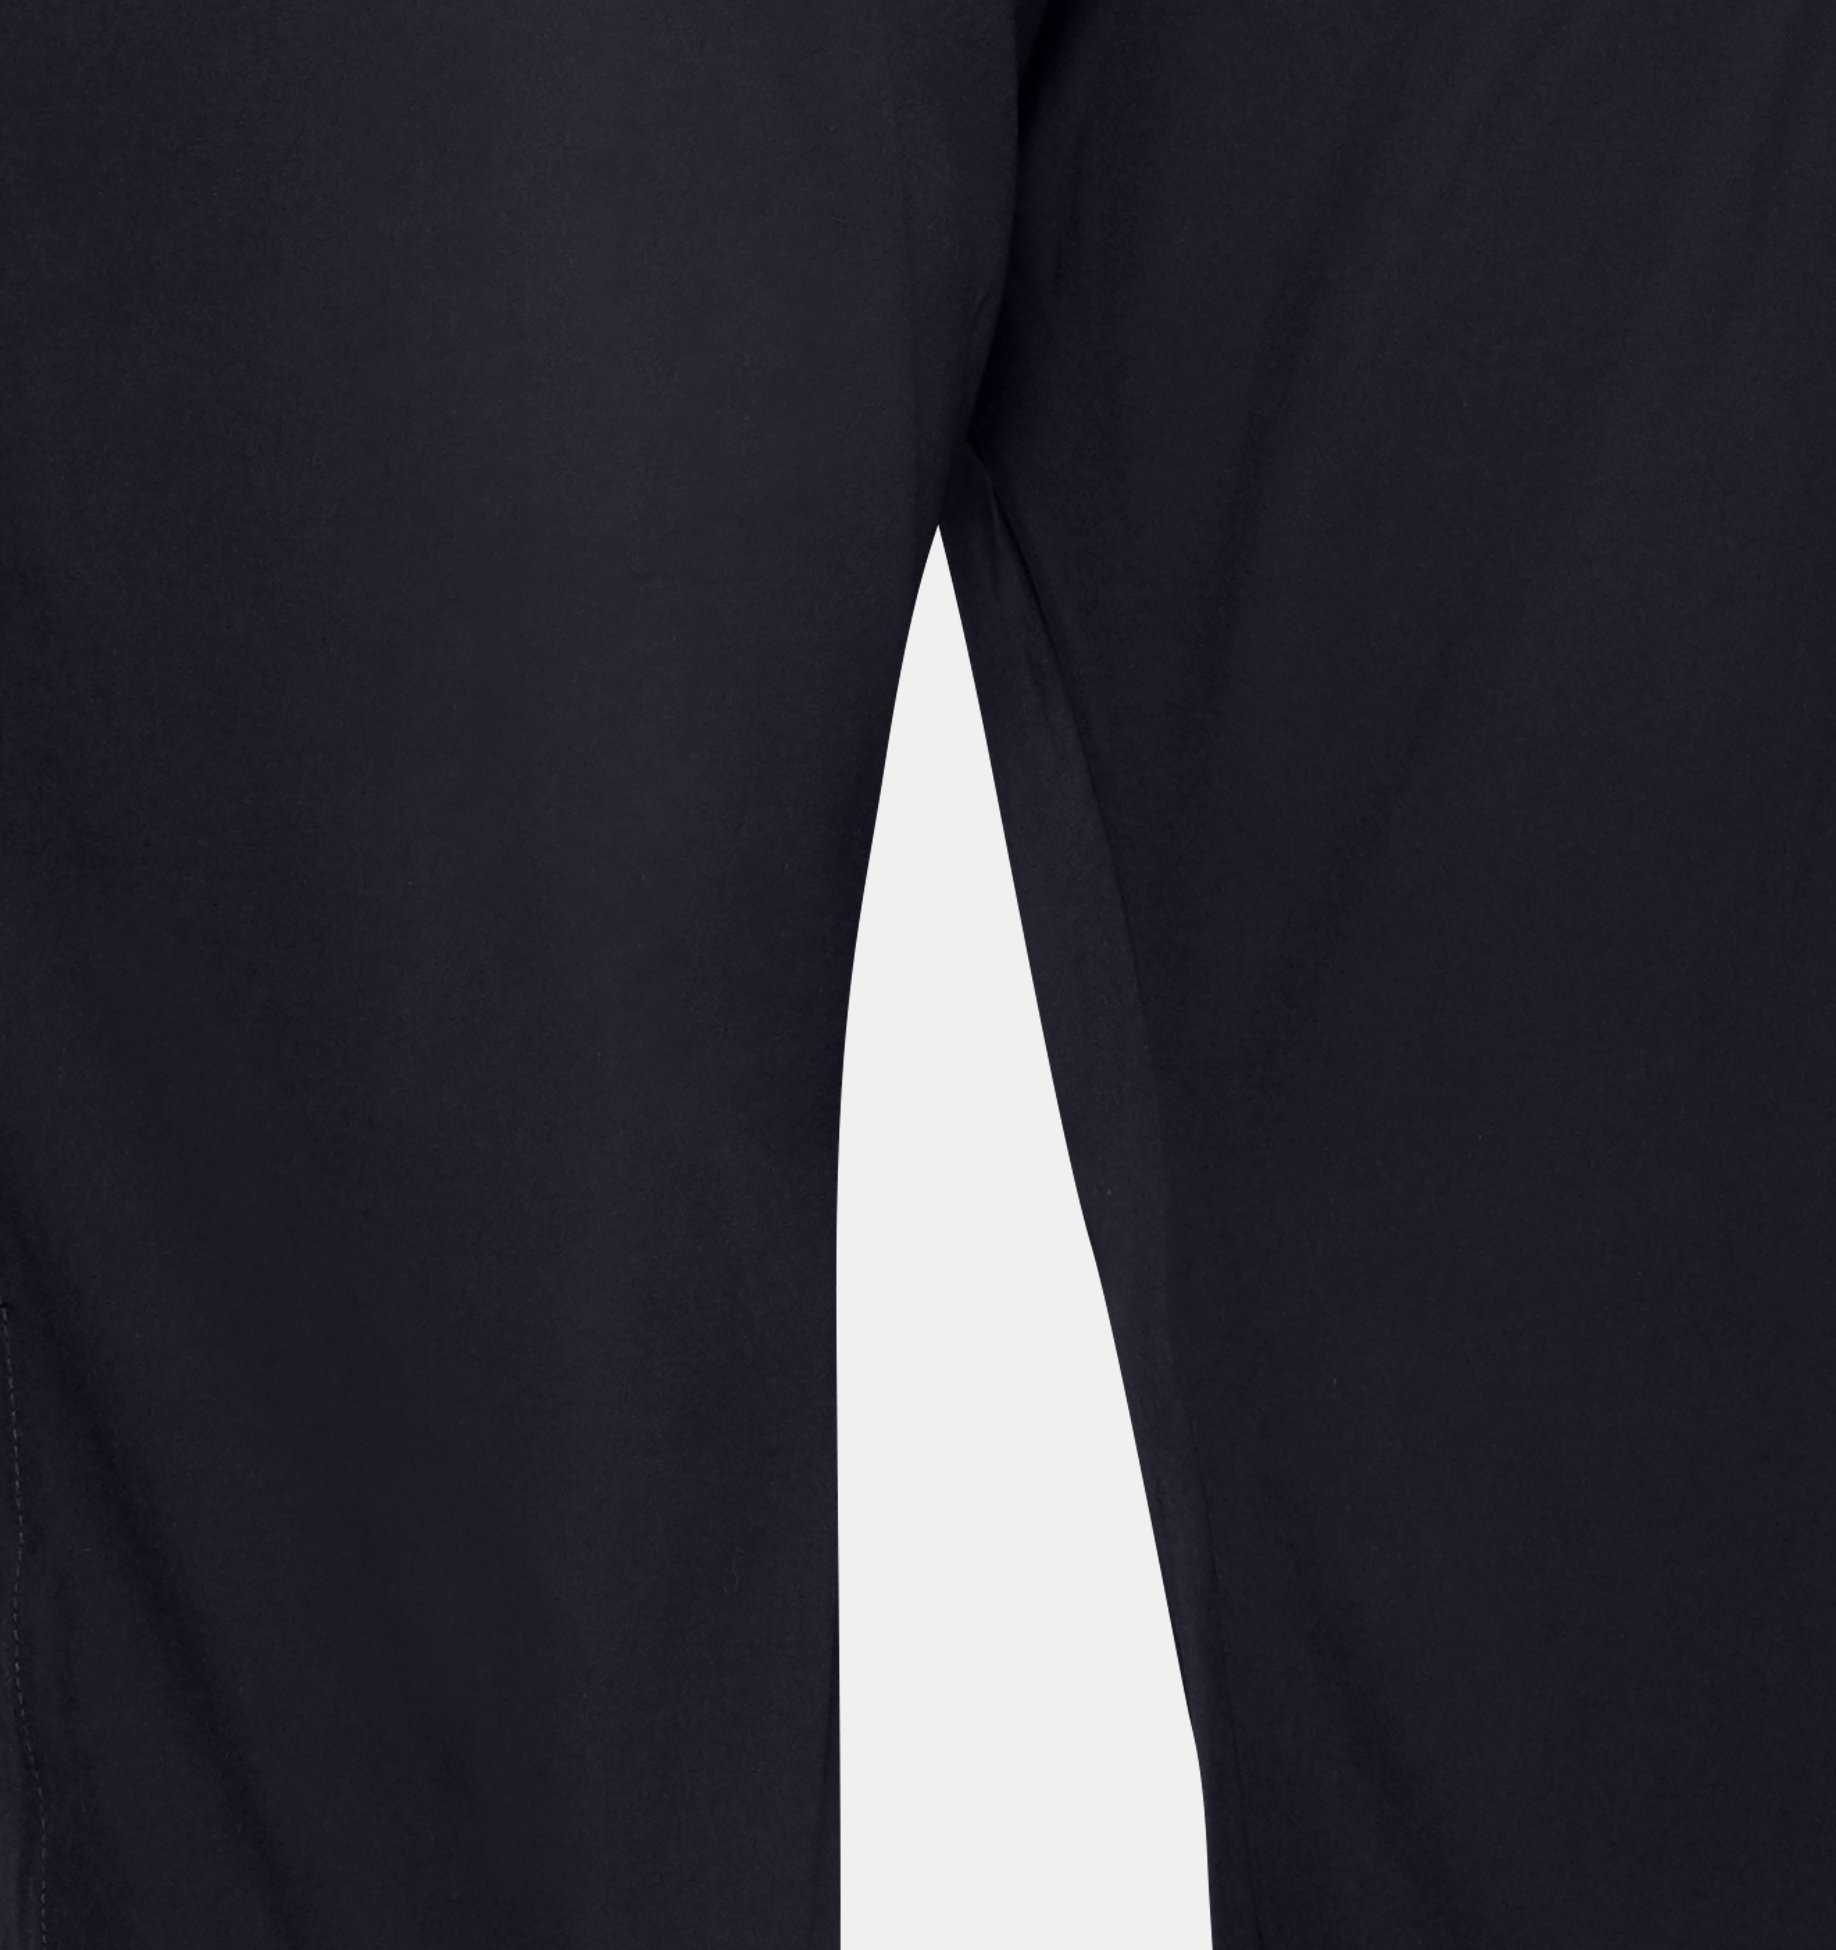  Essential Script Pant, Black - women's sweatpants - UNDER  ARMOUR - 55.39 € - outdoorové oblečení a vybavení shop